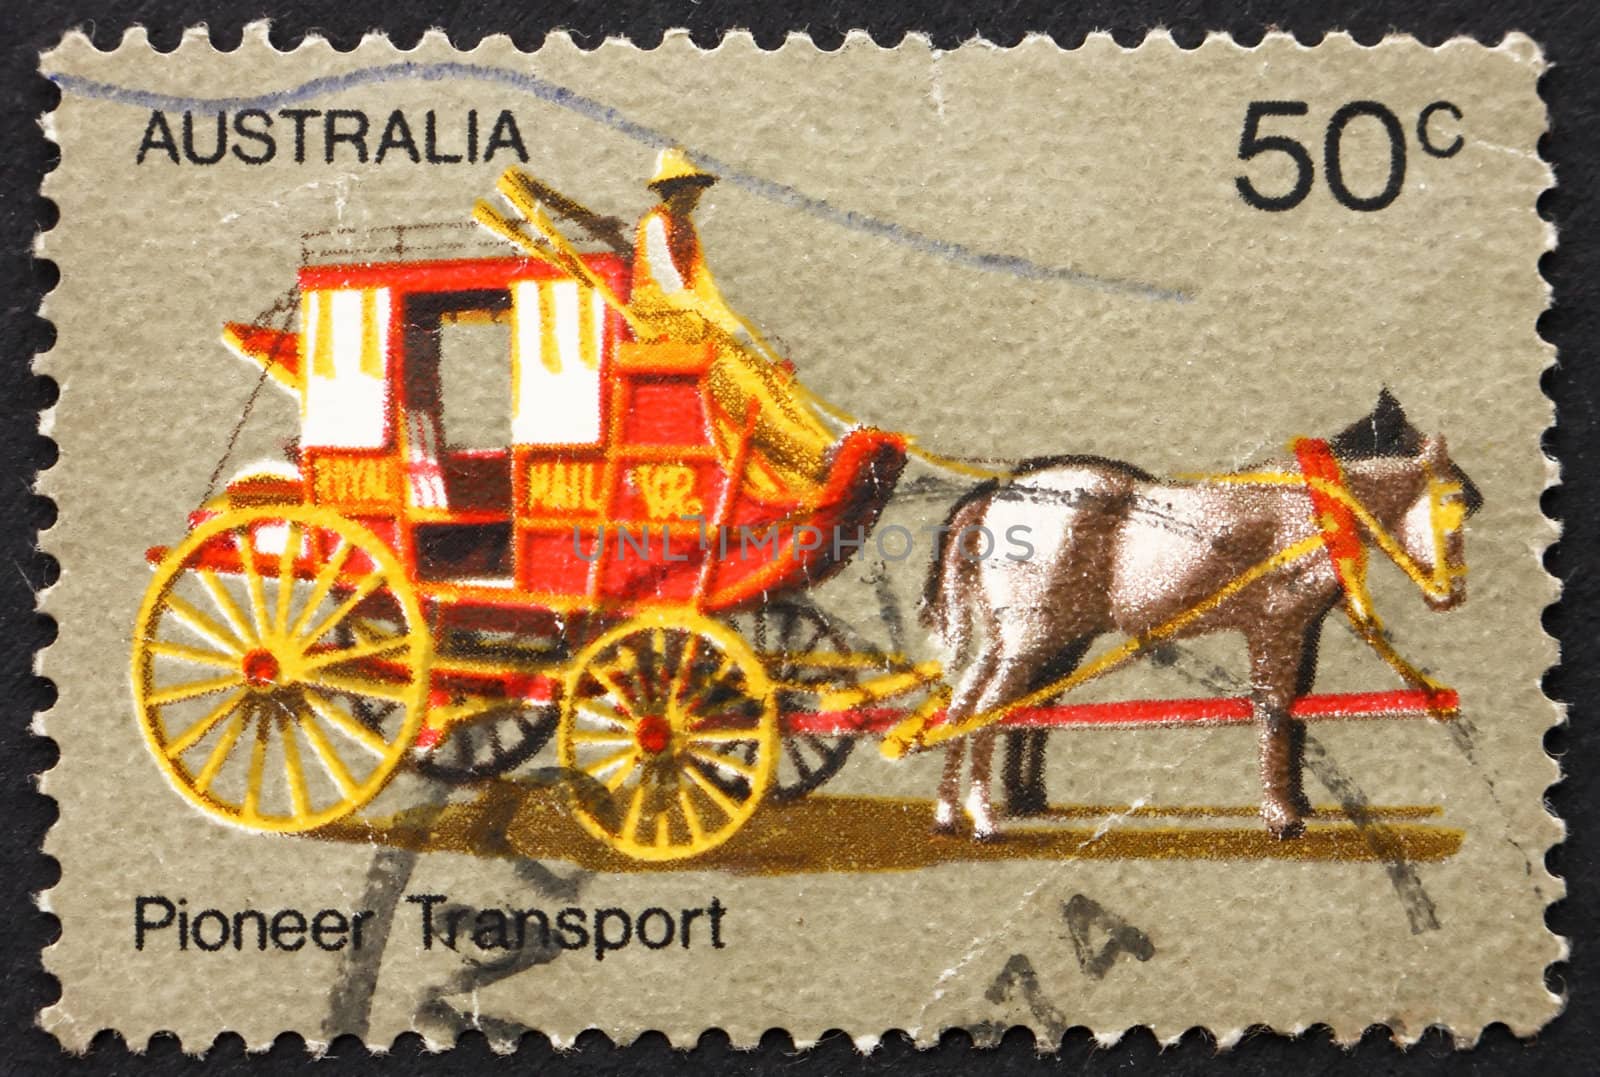 AUSTRALIA - CIRCA 1972: a stamp printed in the Australia shows Coach Transport, Australian Pioneer Life, circa 1972